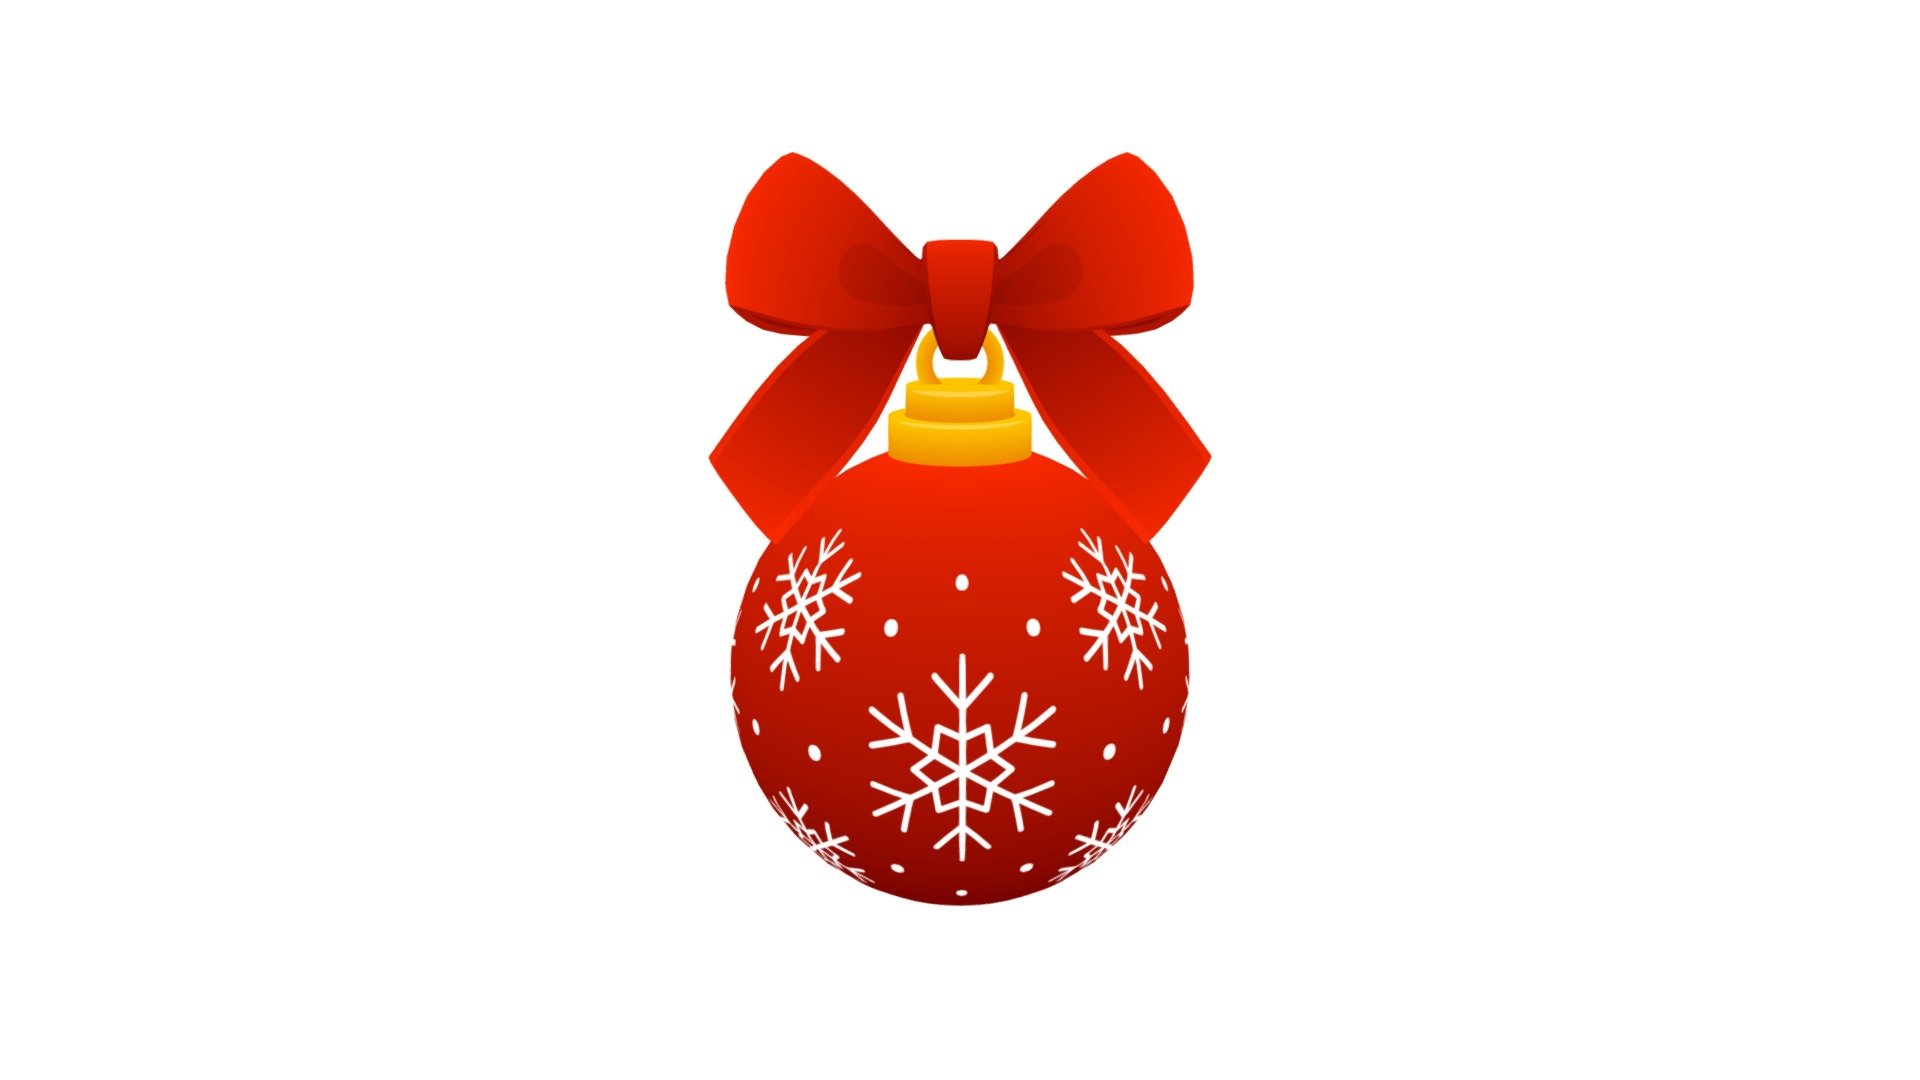 Low Poly Christmas Decoration Ball.
Files: .c4d, .fbx, .obj, .mtl, + textures 3d model